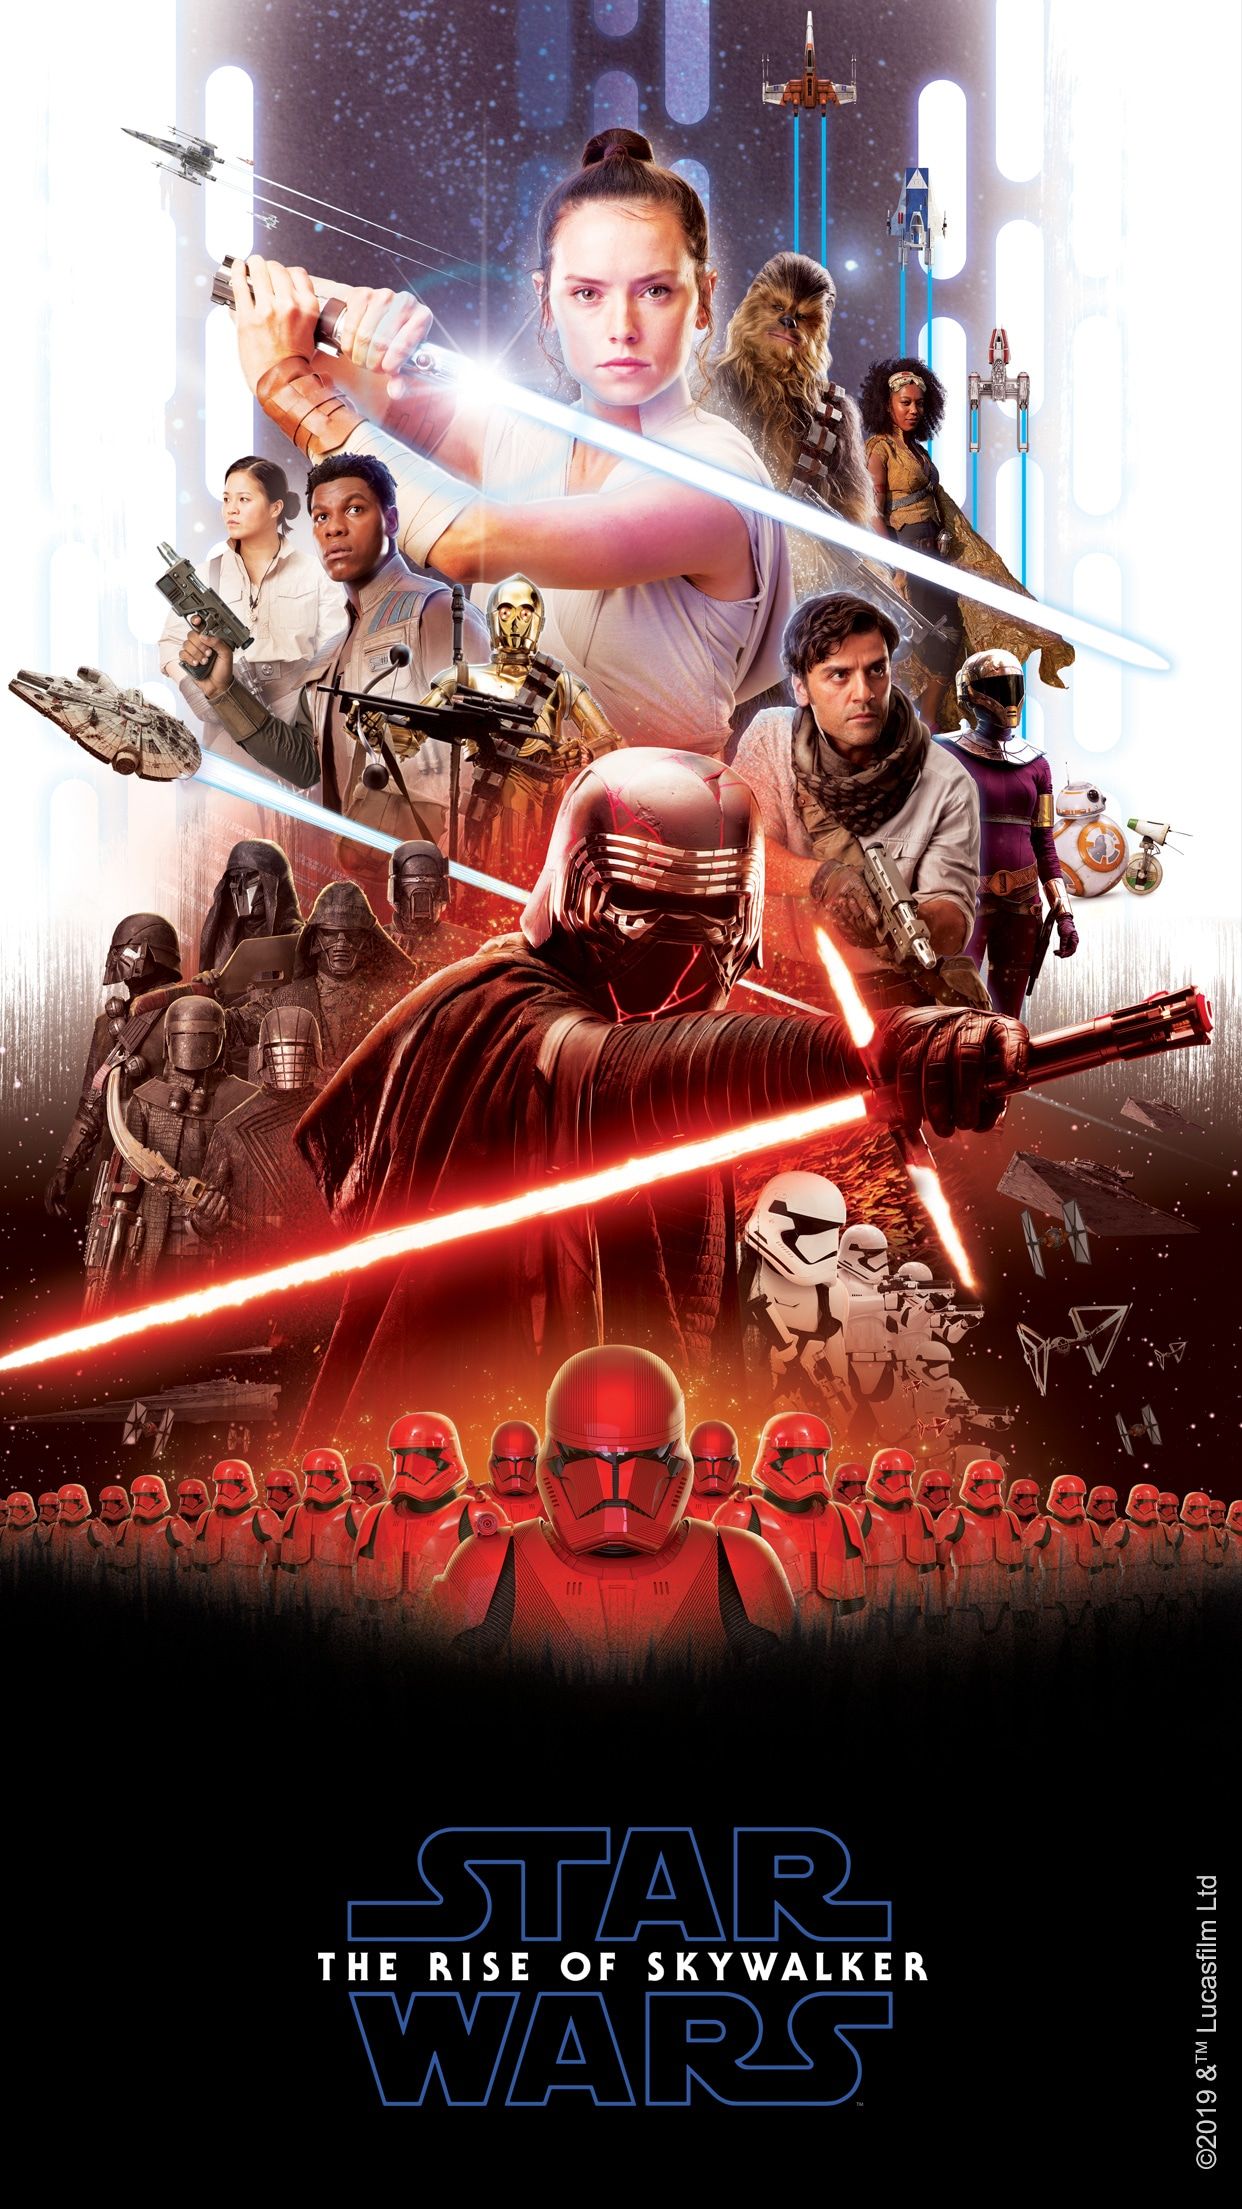 Star Wars: The Rise of Skywalker Mobile Wallpaper. Disney